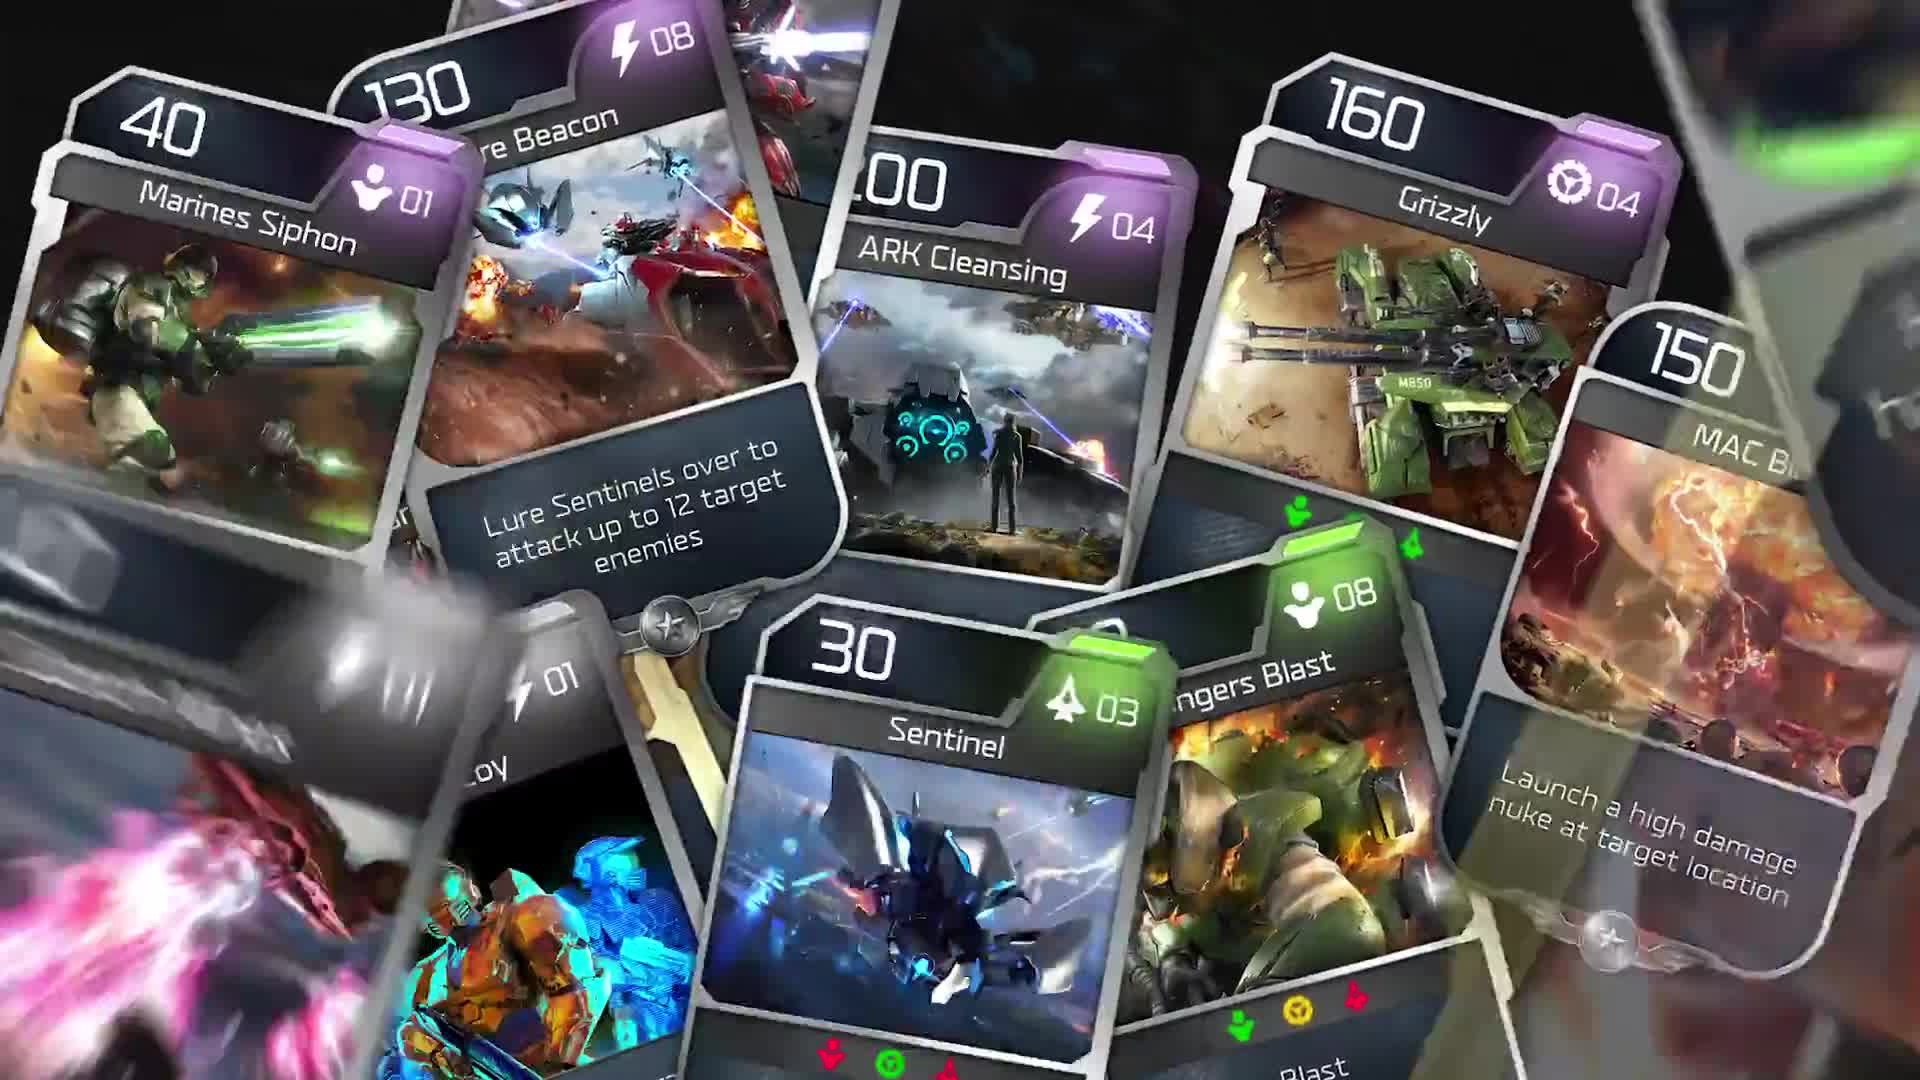 Halo Wars 2 - Blitz - multiplayer beta